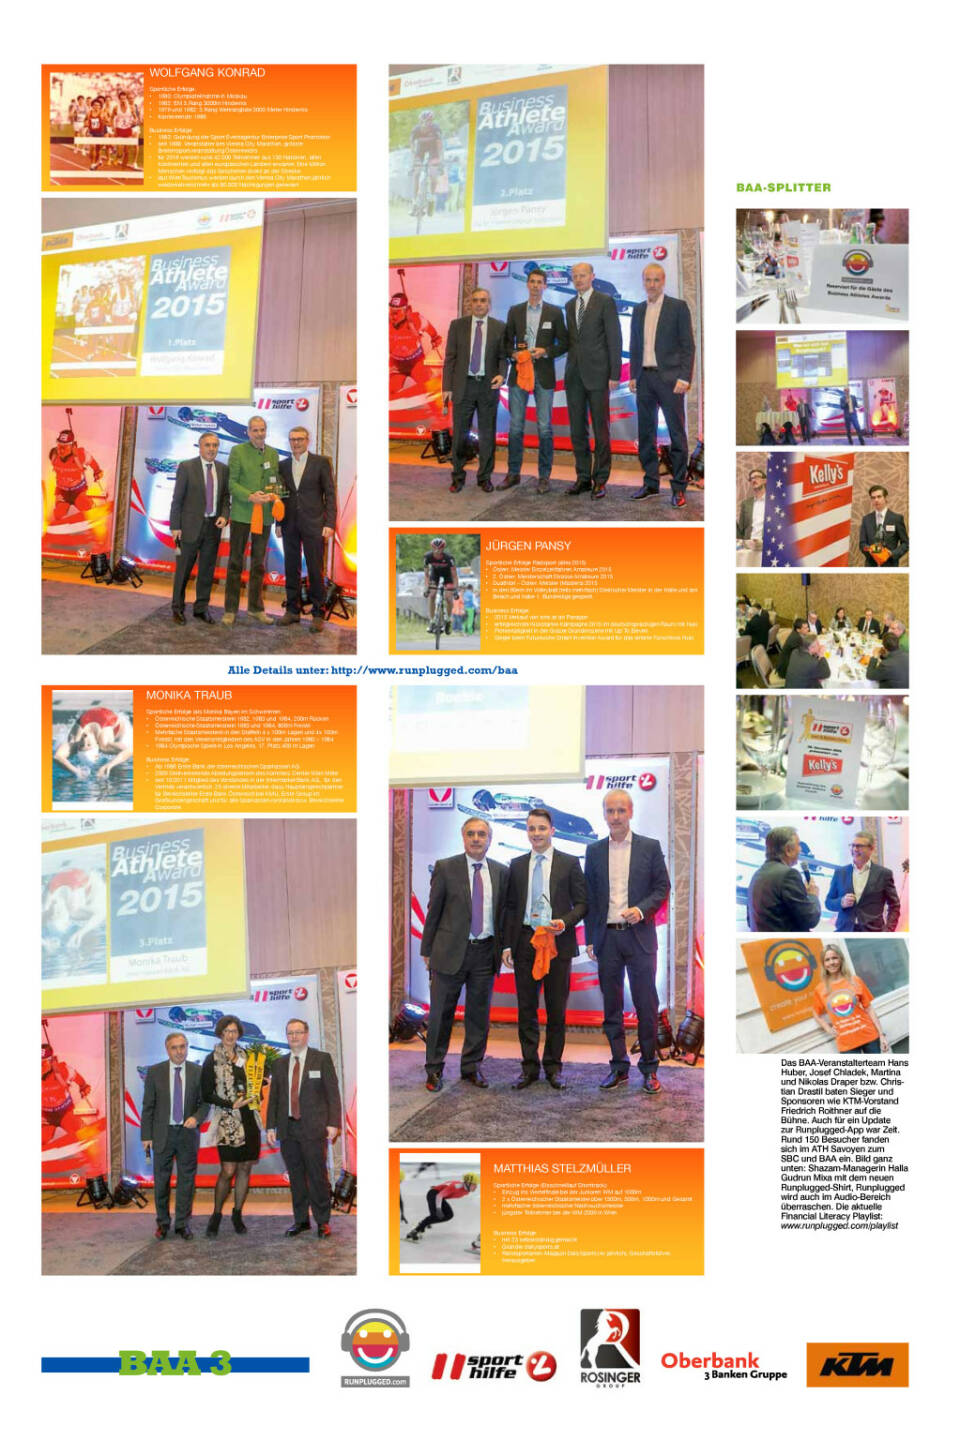 Sondernummer zur Runplugged Business Athlete Award 2015 presented by KTM, Seite 3/4, komplettes Dokument unter http://boerse-social.com/static/uploads/file_508_sondernummer_zur_runplugged_business_athlete_award_2015_presented_by_ktm.pdf